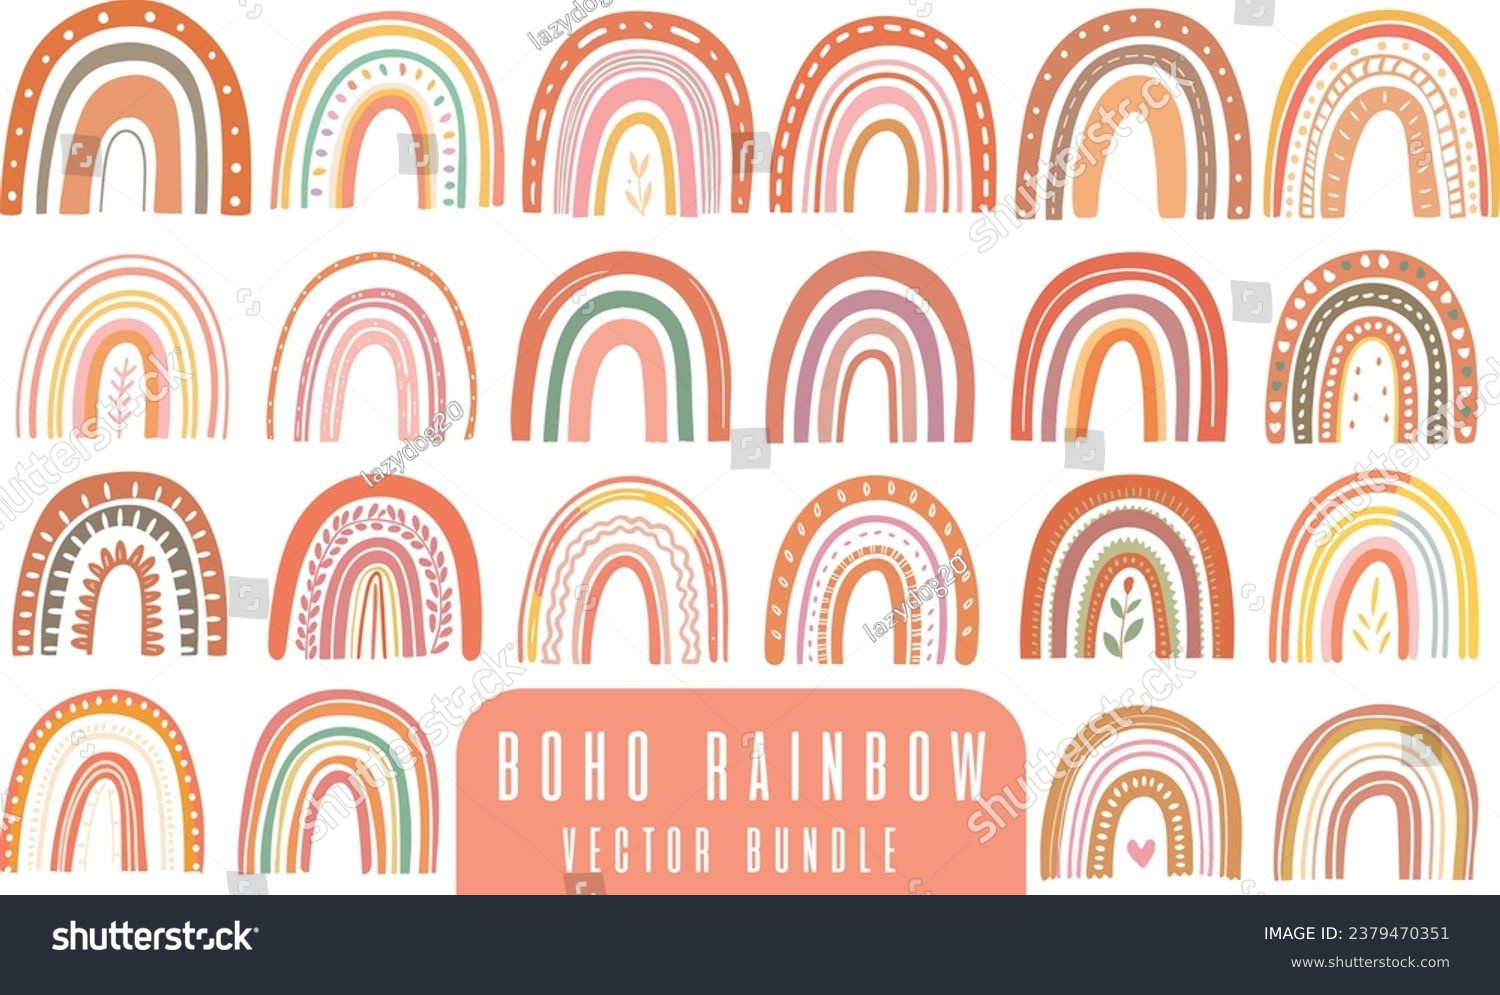 SVG of Retro Boho Rainbow Vector Bundle svg